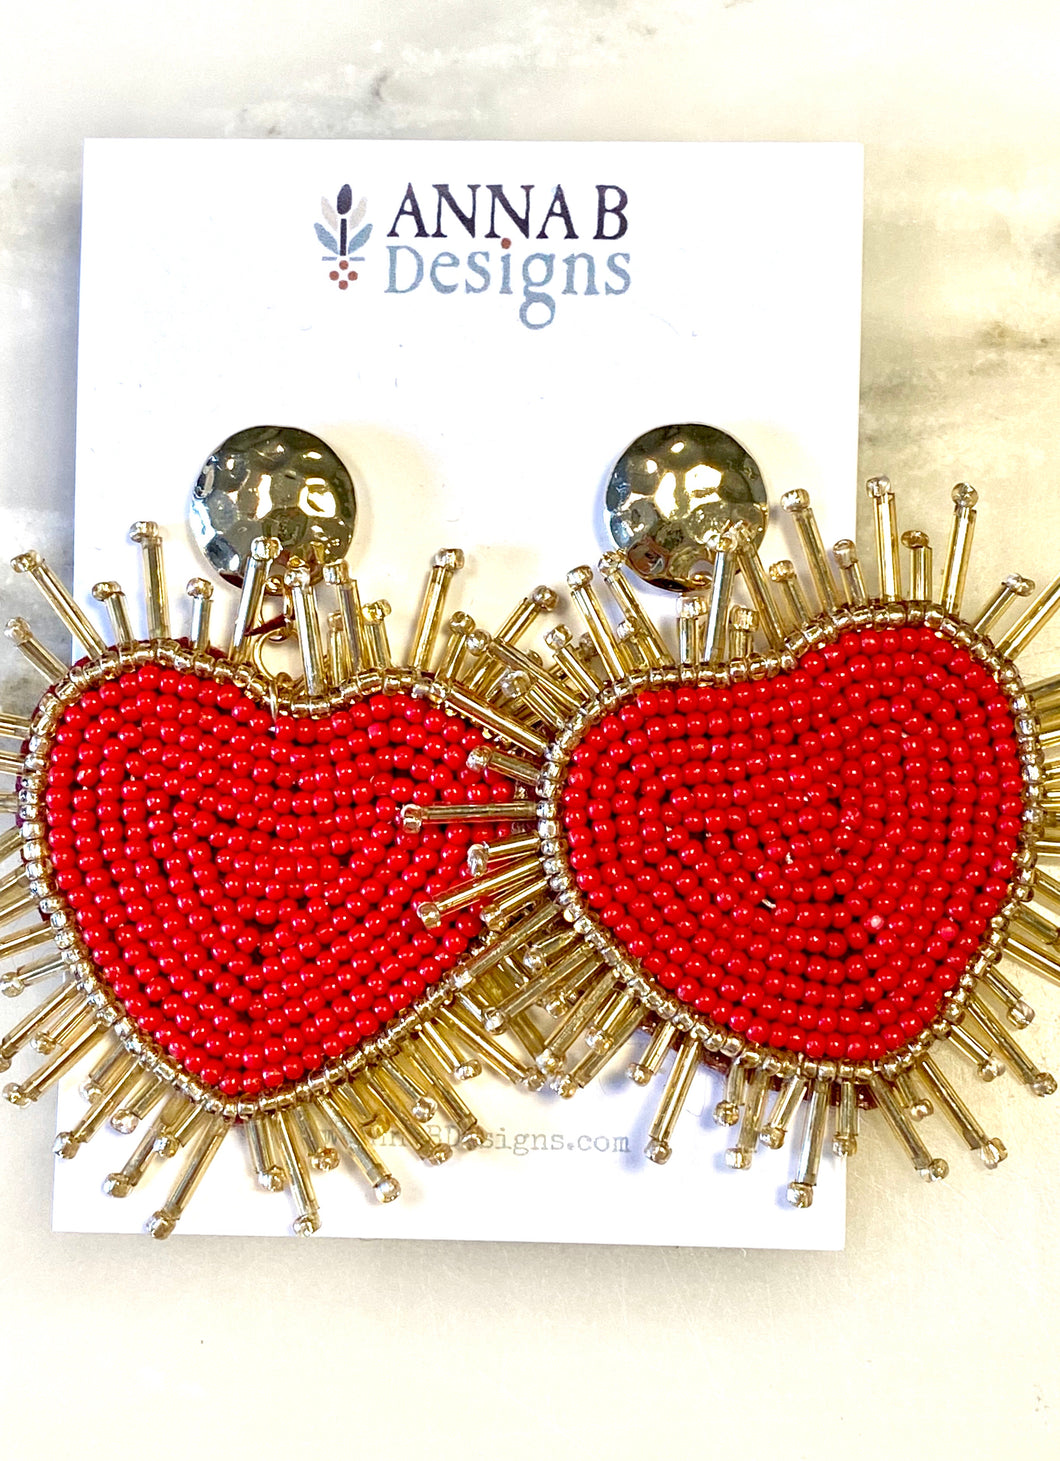 Red Beaded Heart Earrings